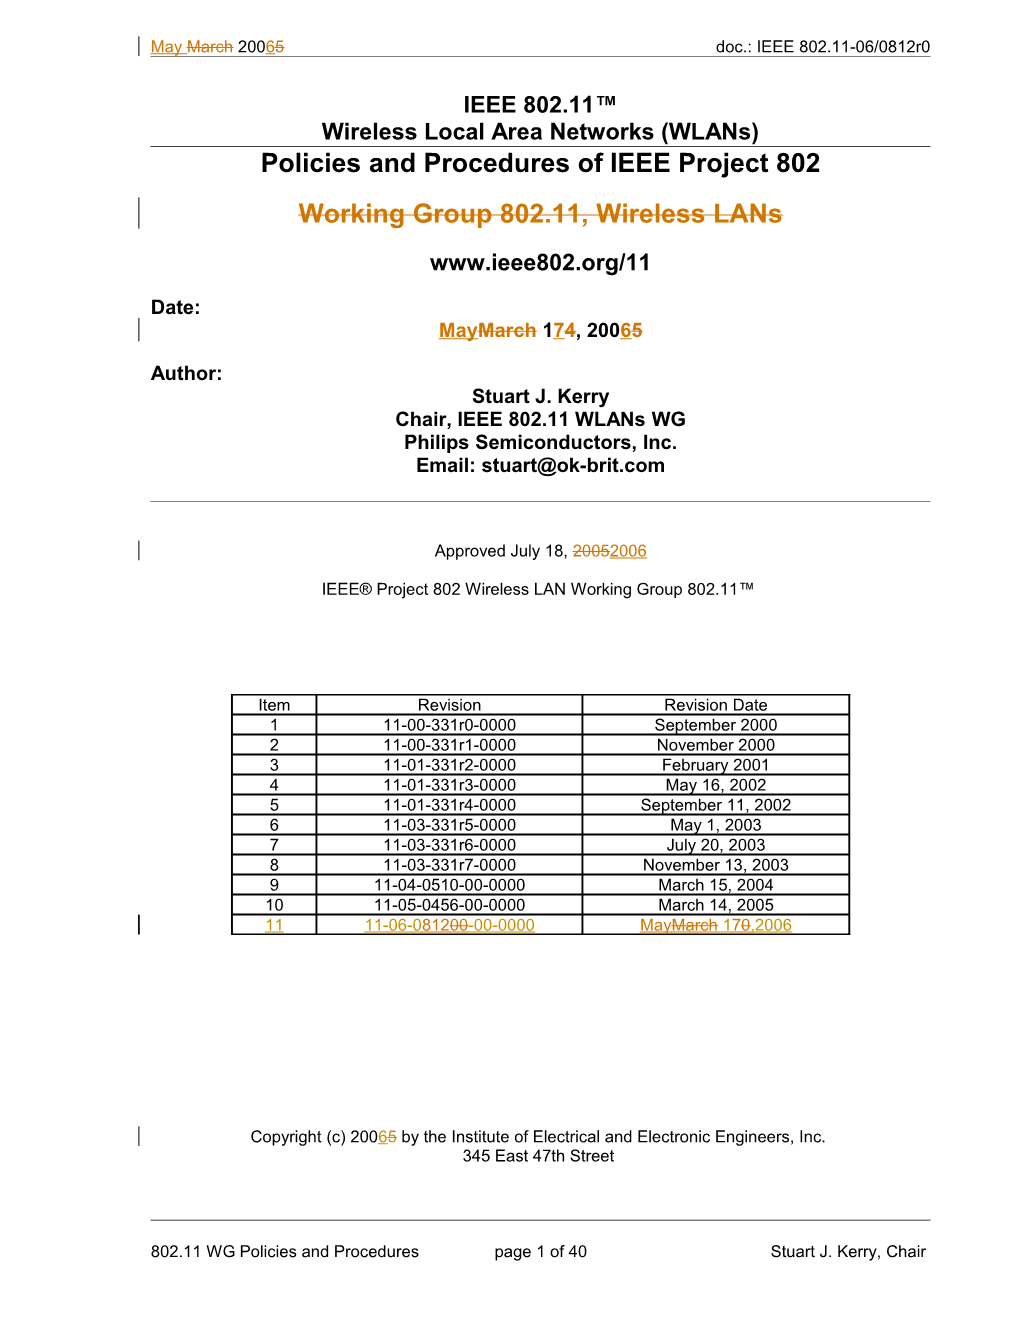 Policies and Procedures of IEEE Project 802